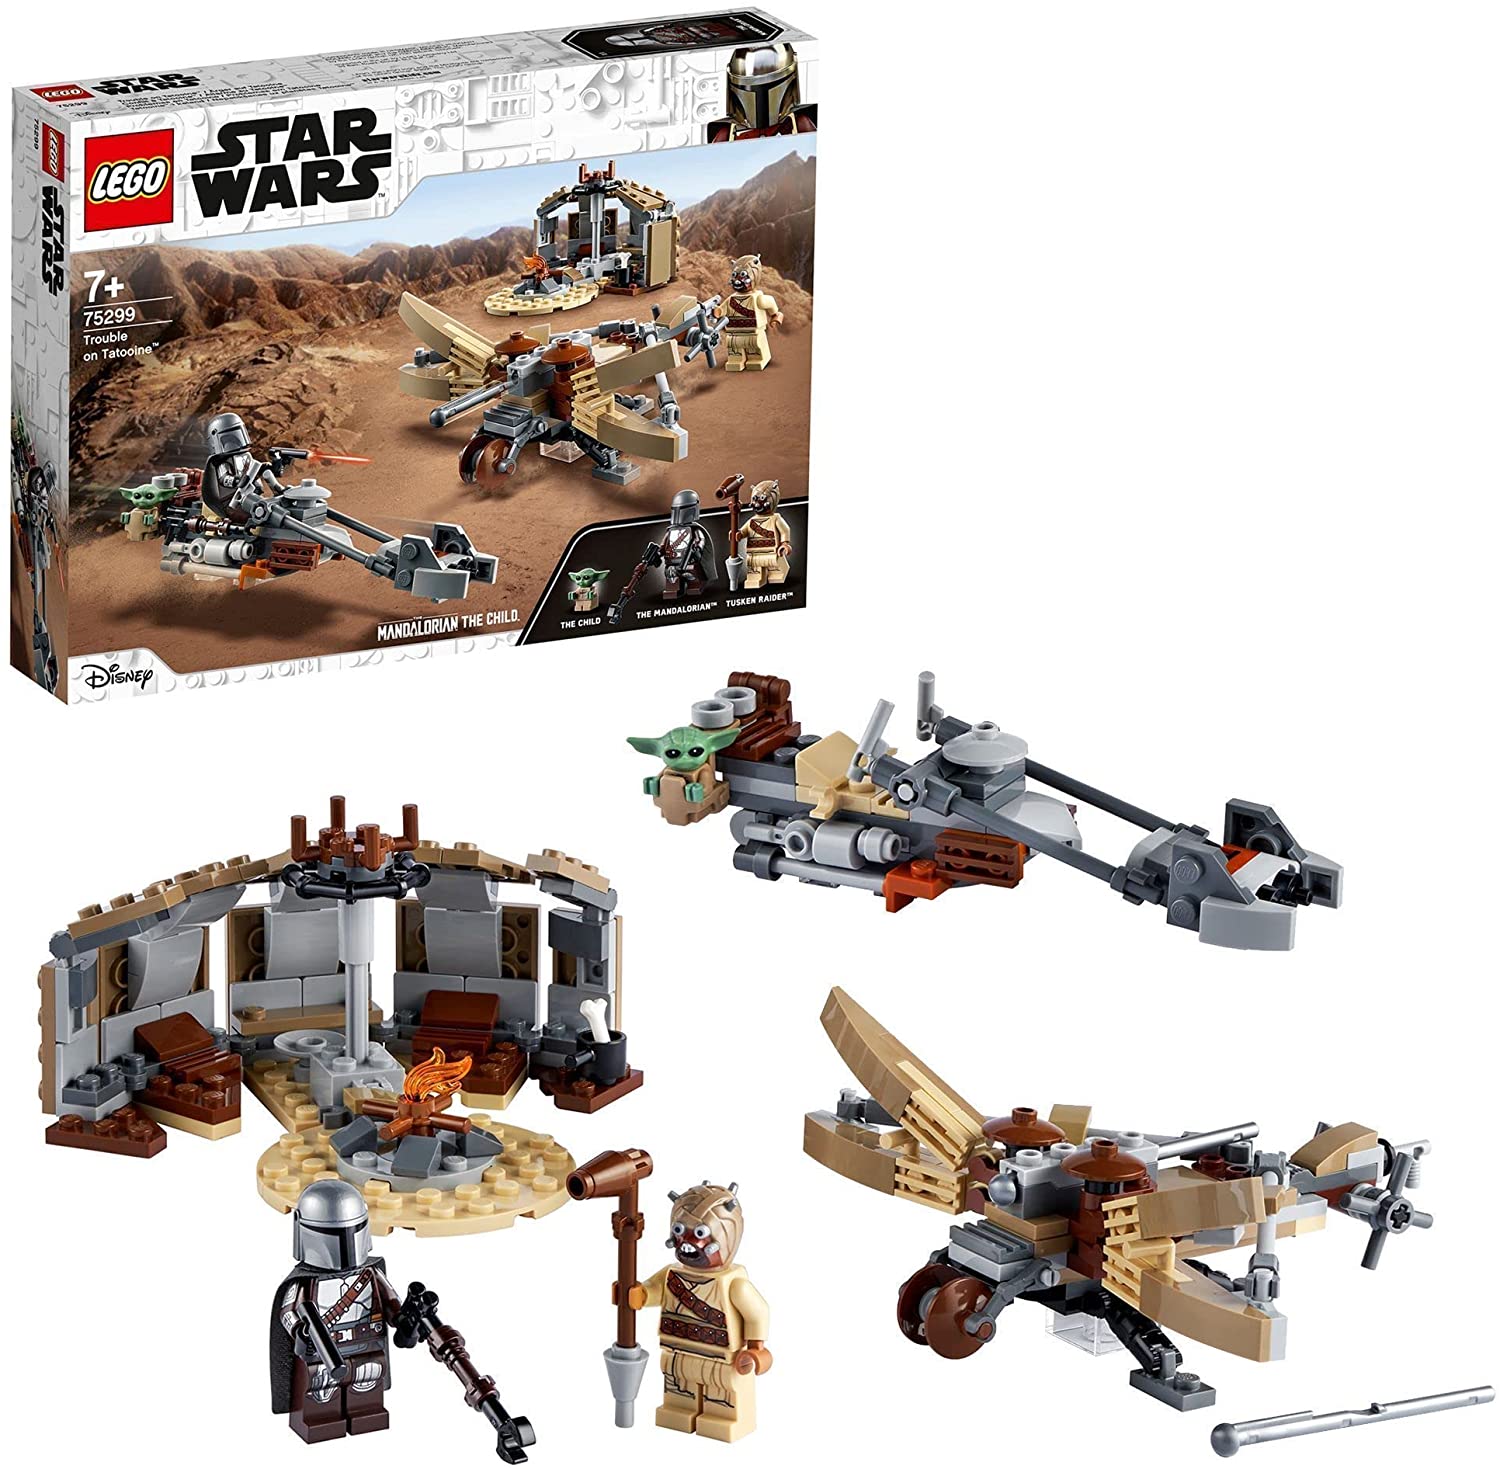 LEGO 75299 Star Wars: The Mandalorian Trouble on Tatooine Construction Kit 